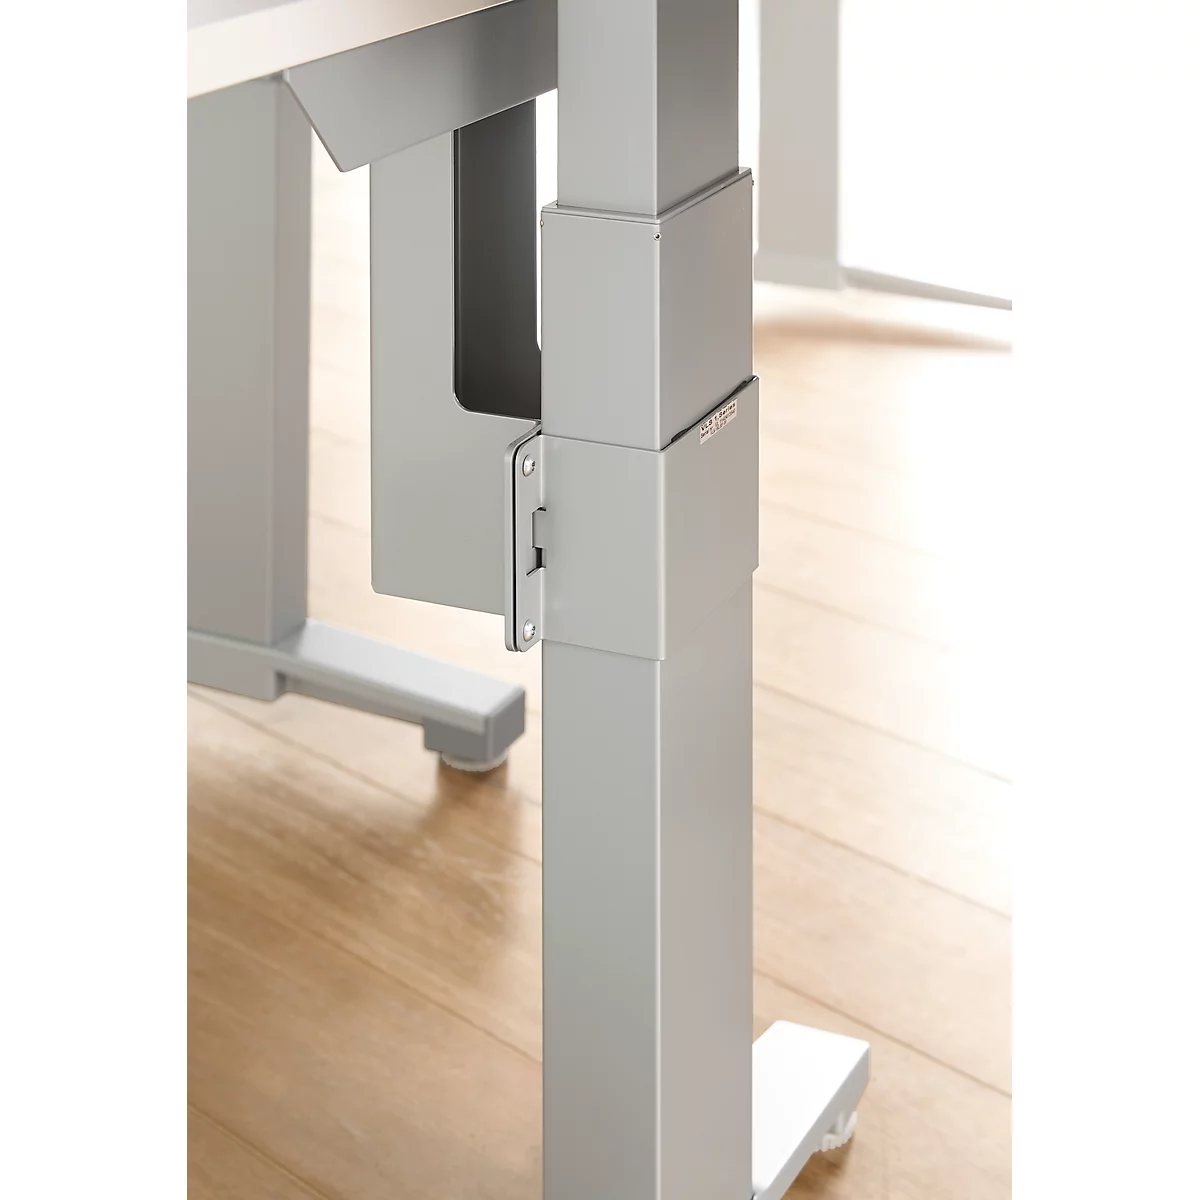 Schäfer Shop Select adaptador de unión, para escritorios de 1 y 2 niveles de altura regulables eléctricamente + manualmente PLANOVA ERGOSTYLE, blanco-alu